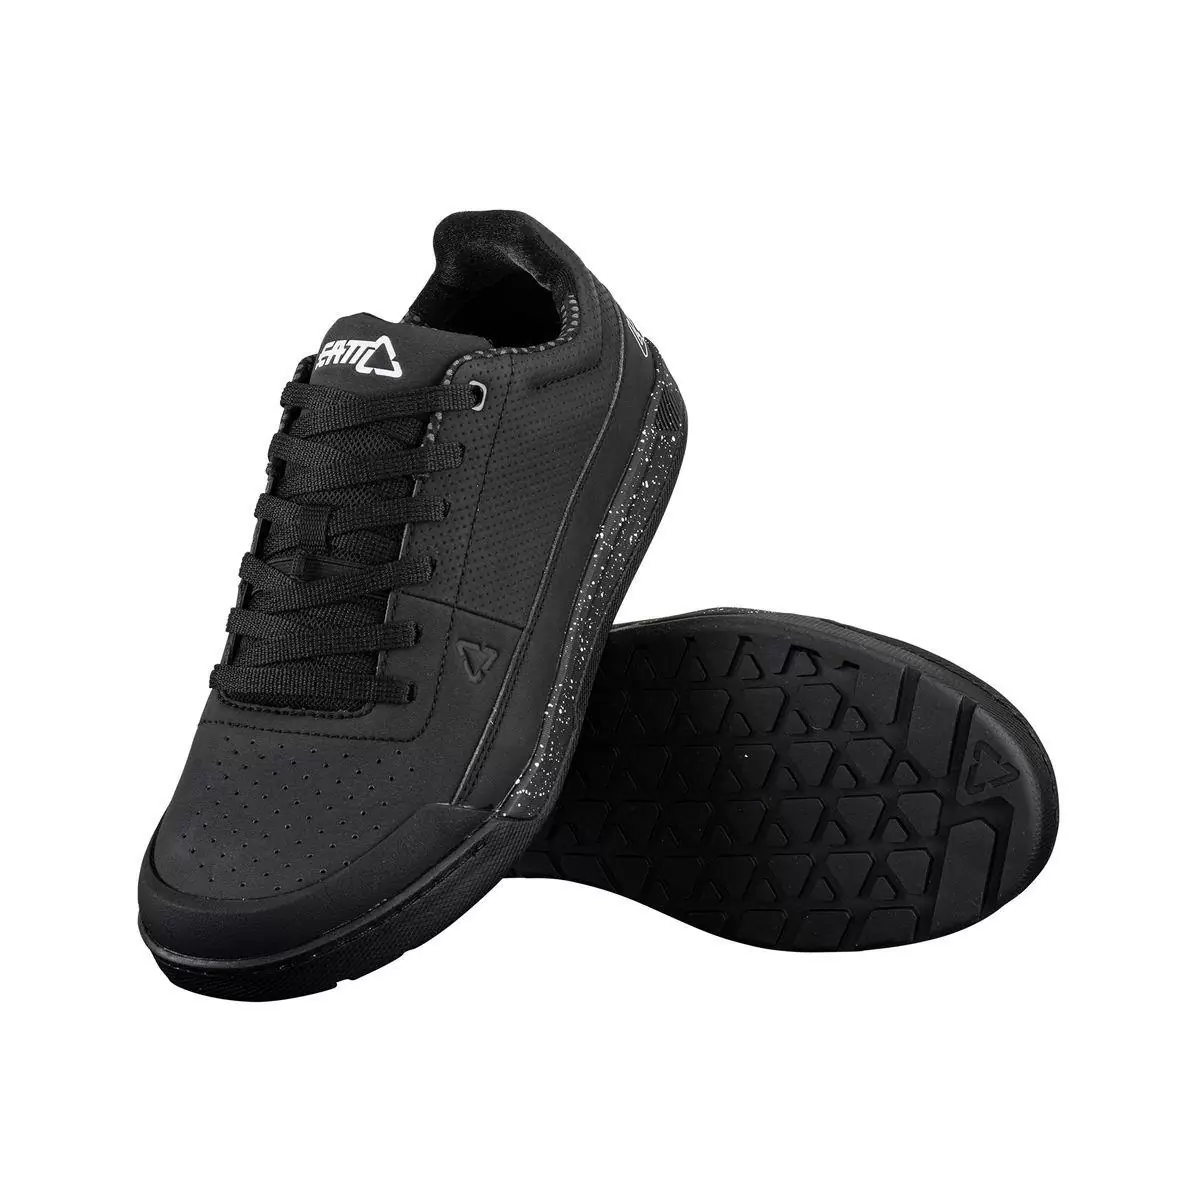 Mtb Shoes 2.0 Flat Black Size 47 #5